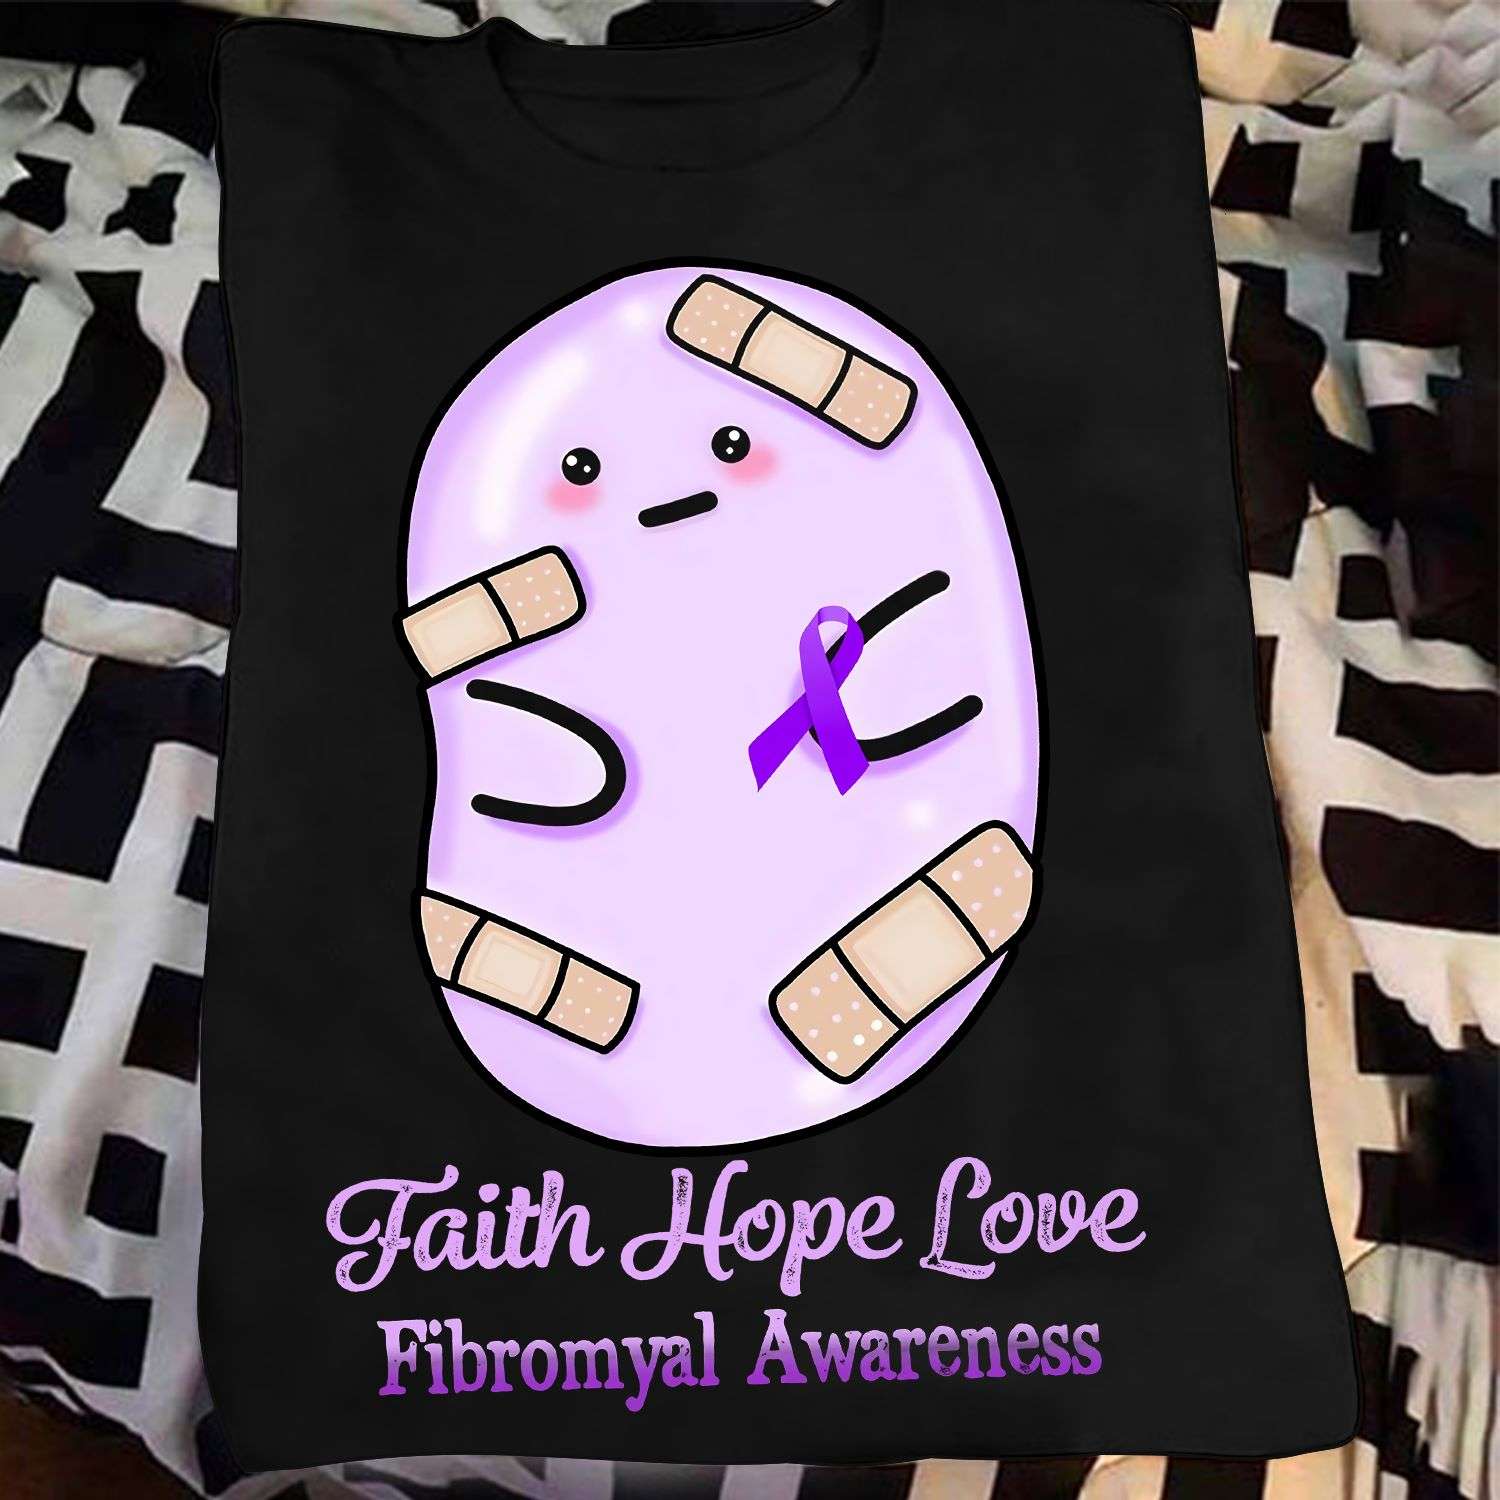 Faith hope love - Fibromyalgia awareness, hope for a cure